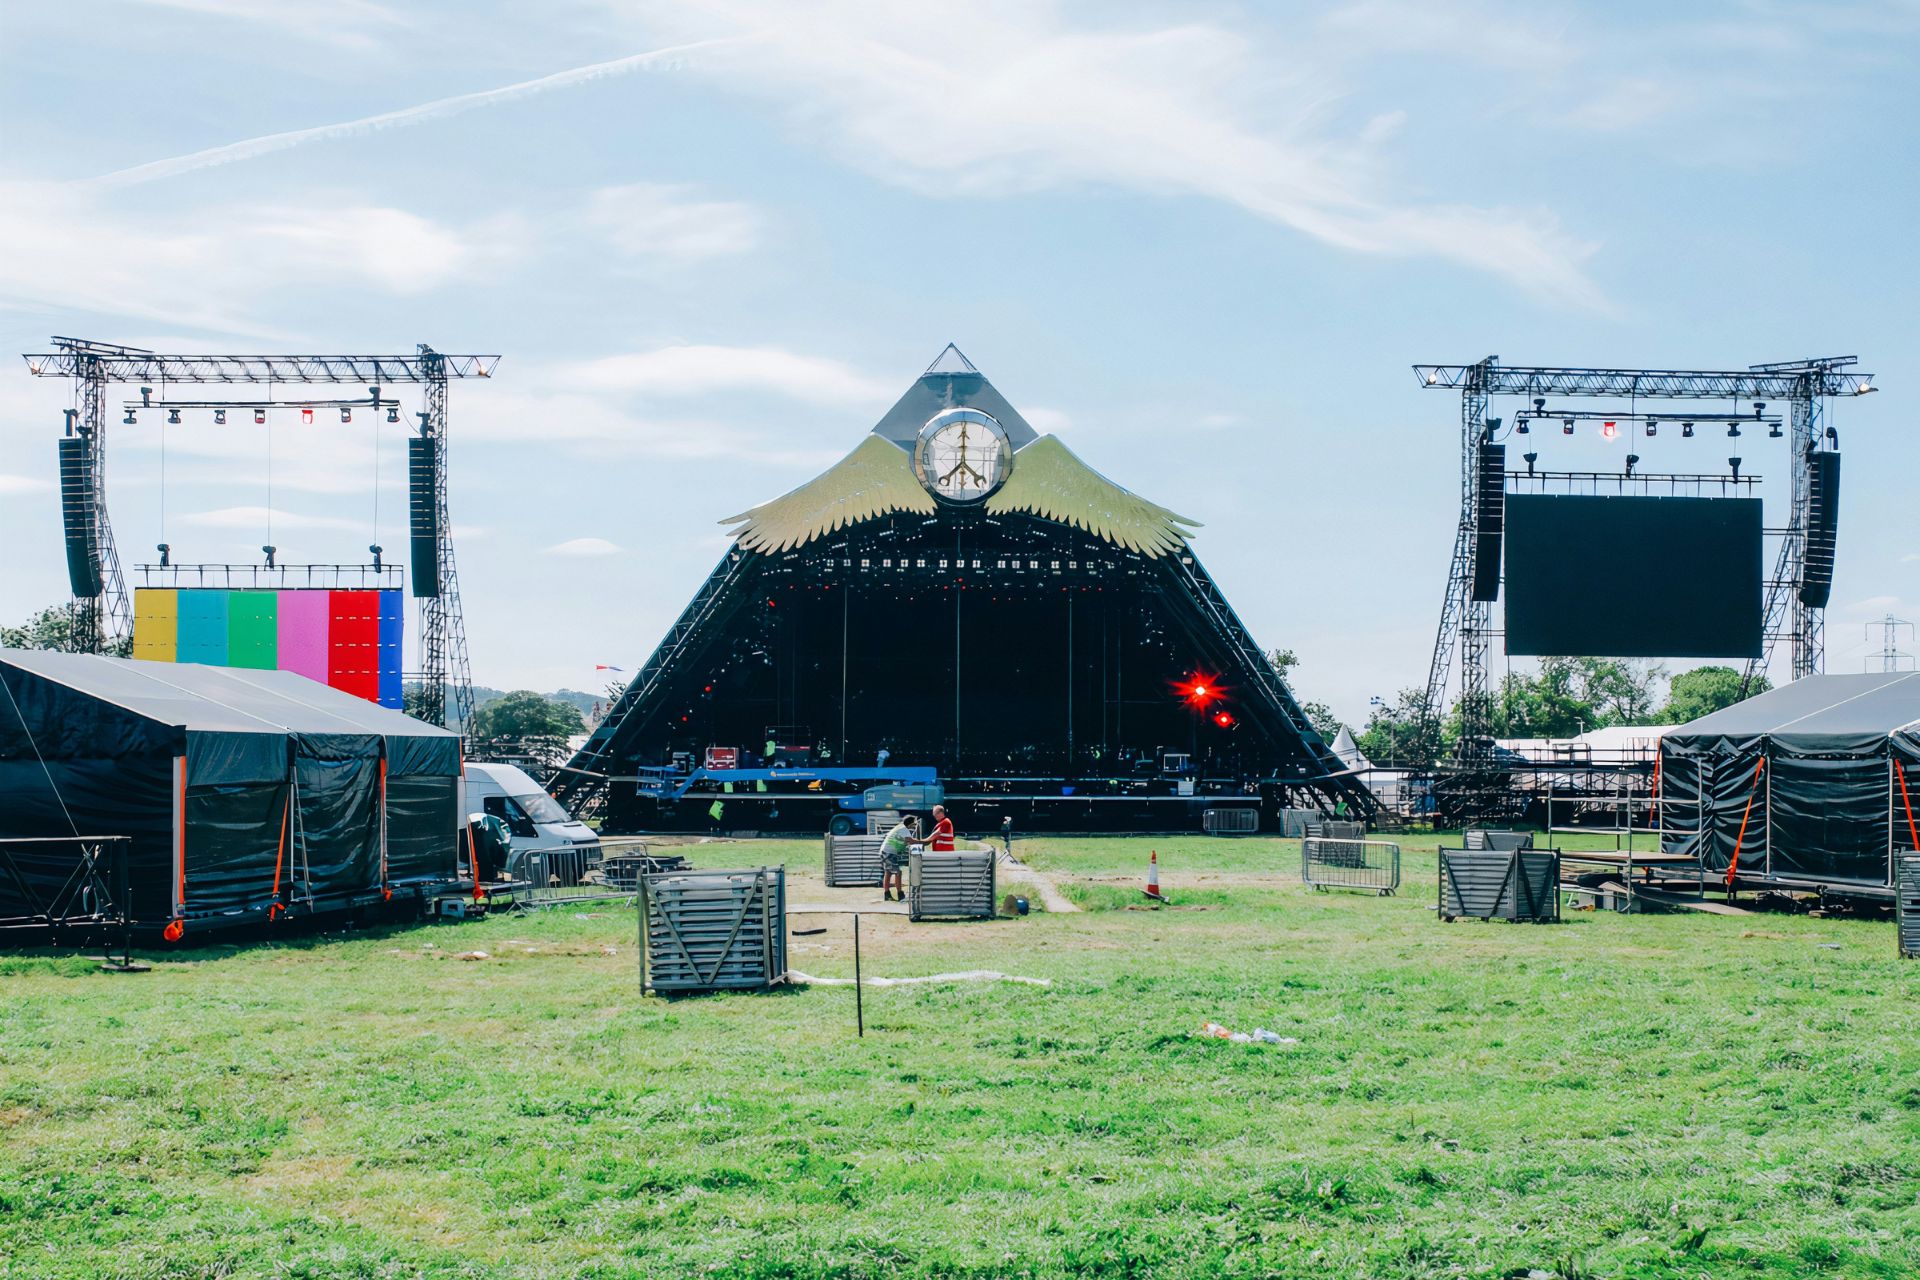 The Glastonbury Pyramid Stage being set up.